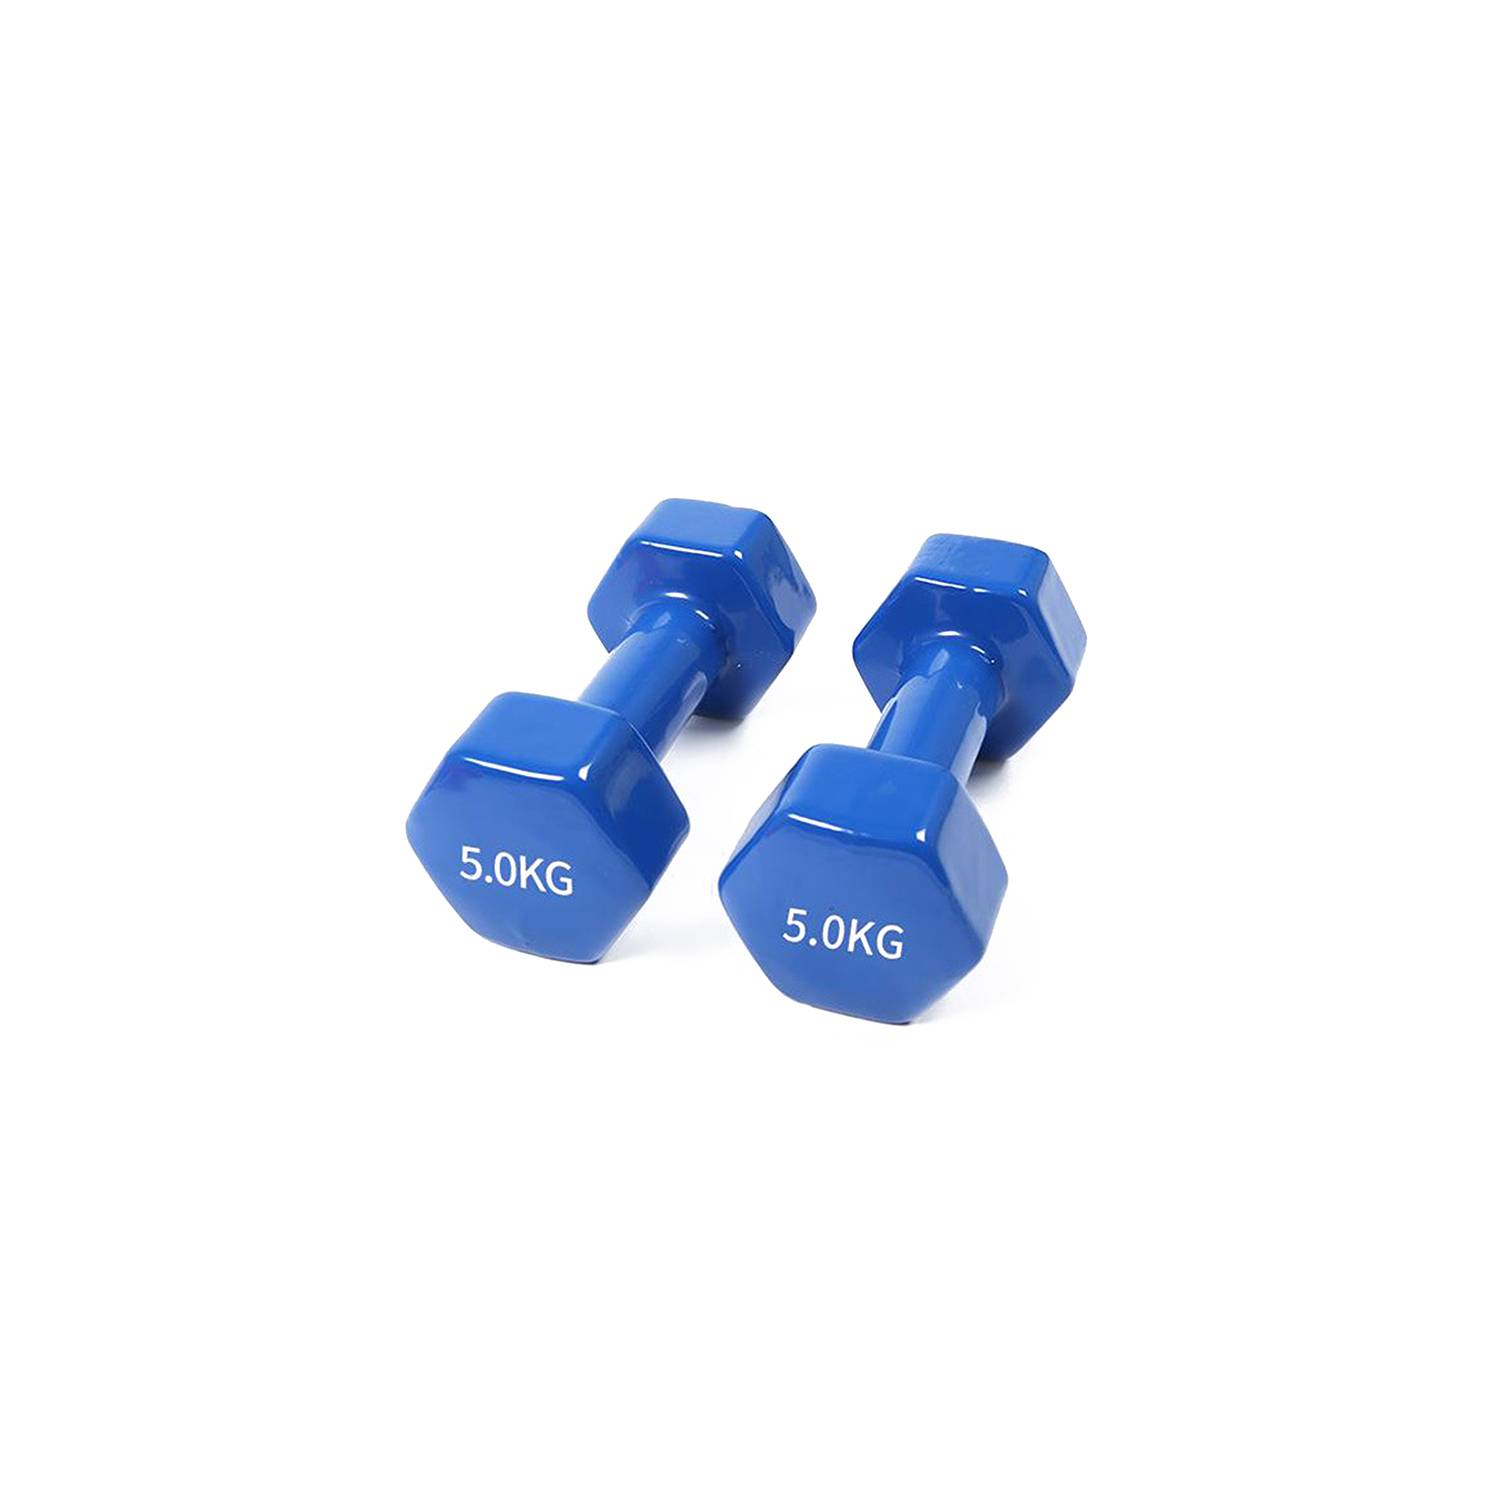 Mancuernas Functional 5Kg - Azul (Par) - Rudem Fitness Equipment